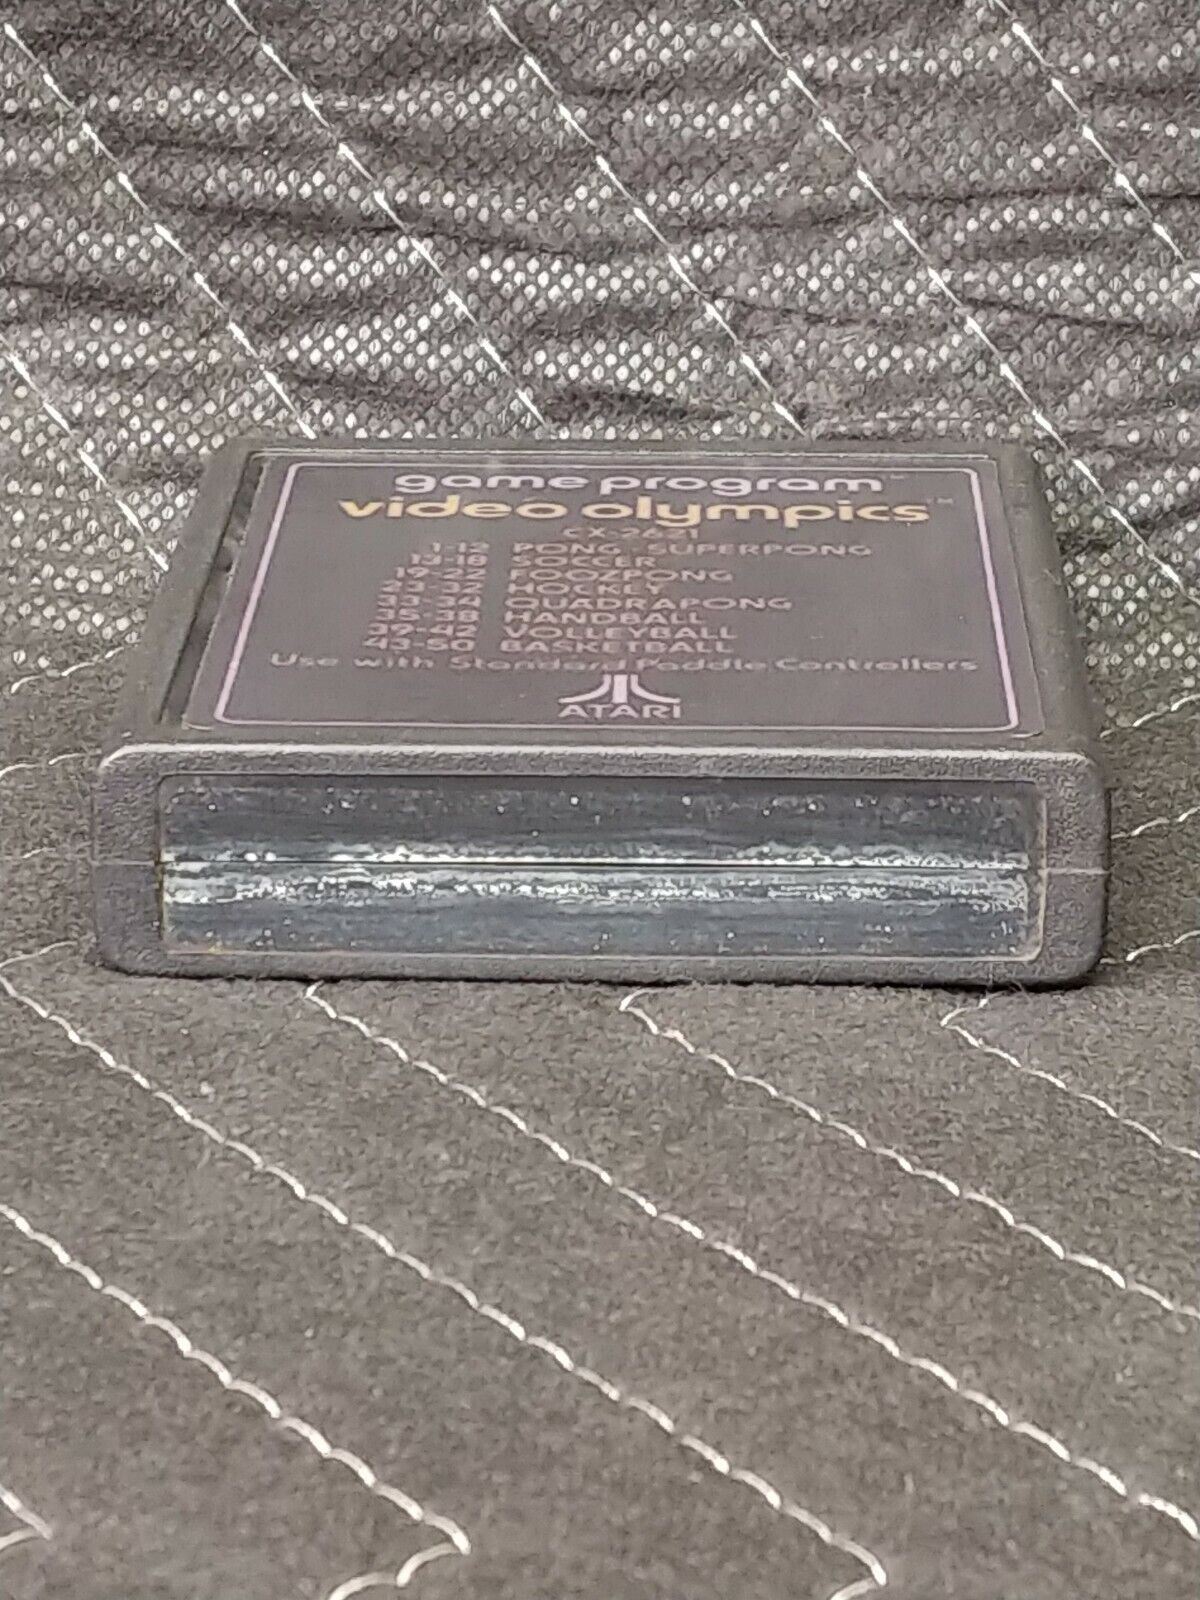 Atari 2600 Video Olympics CX-2621 Video Game Cartridge.